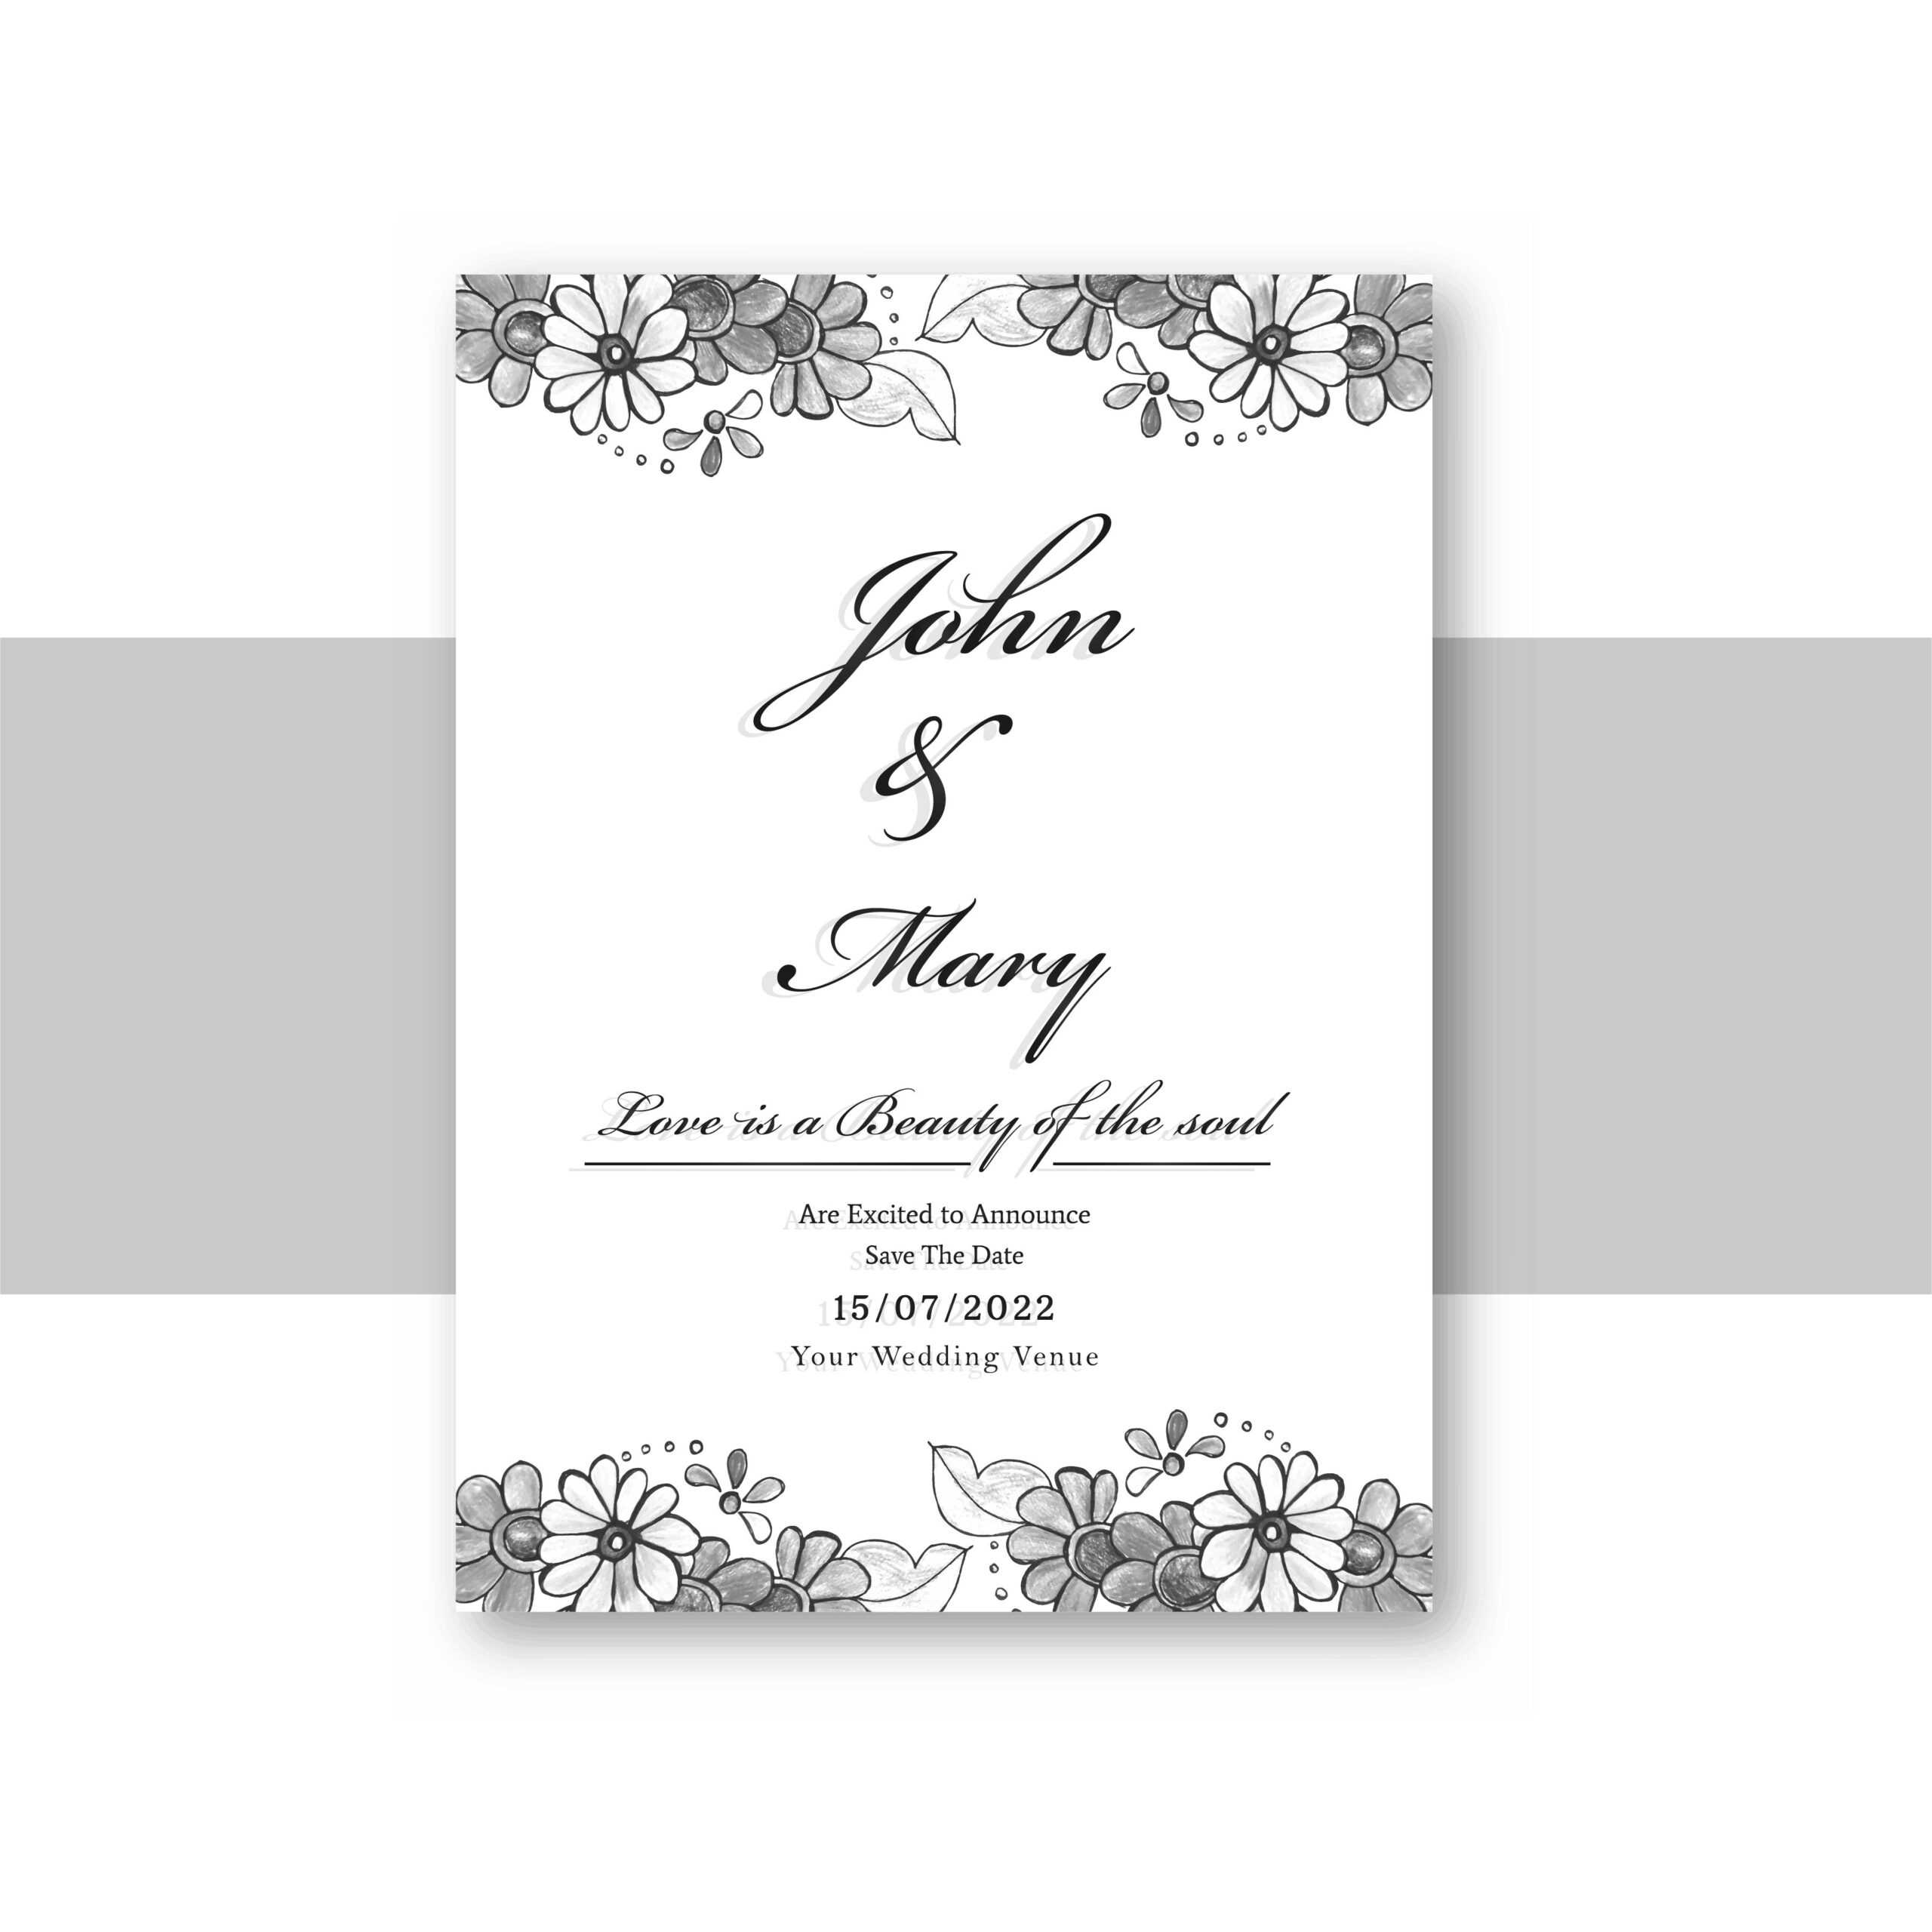 Beautiful Wedding Invitation Card Template With Decorative With Invitation Cards Templates For Marriage